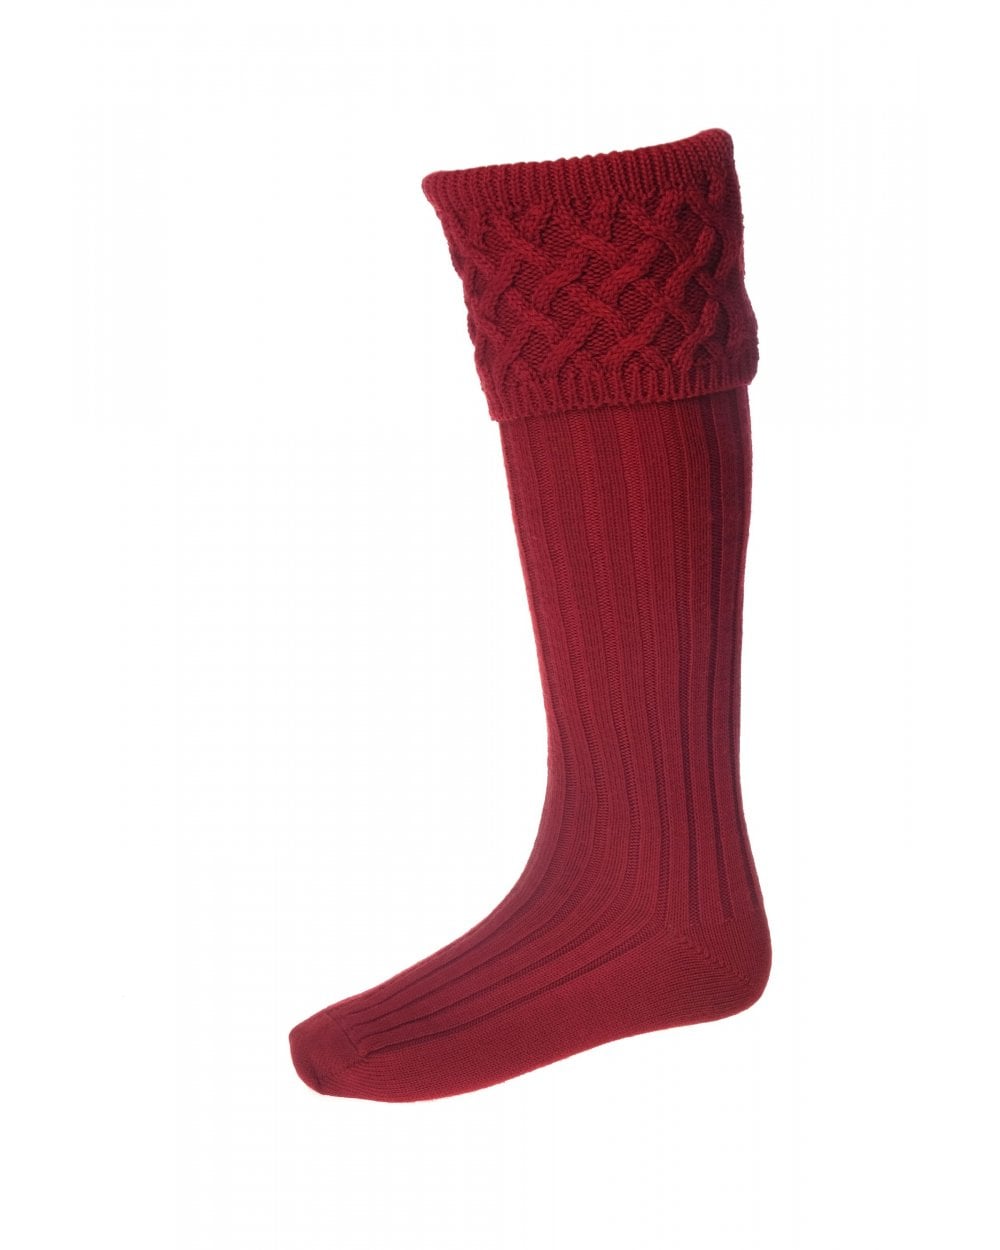 House of Cheviot Rannoch Socks - Brick Red